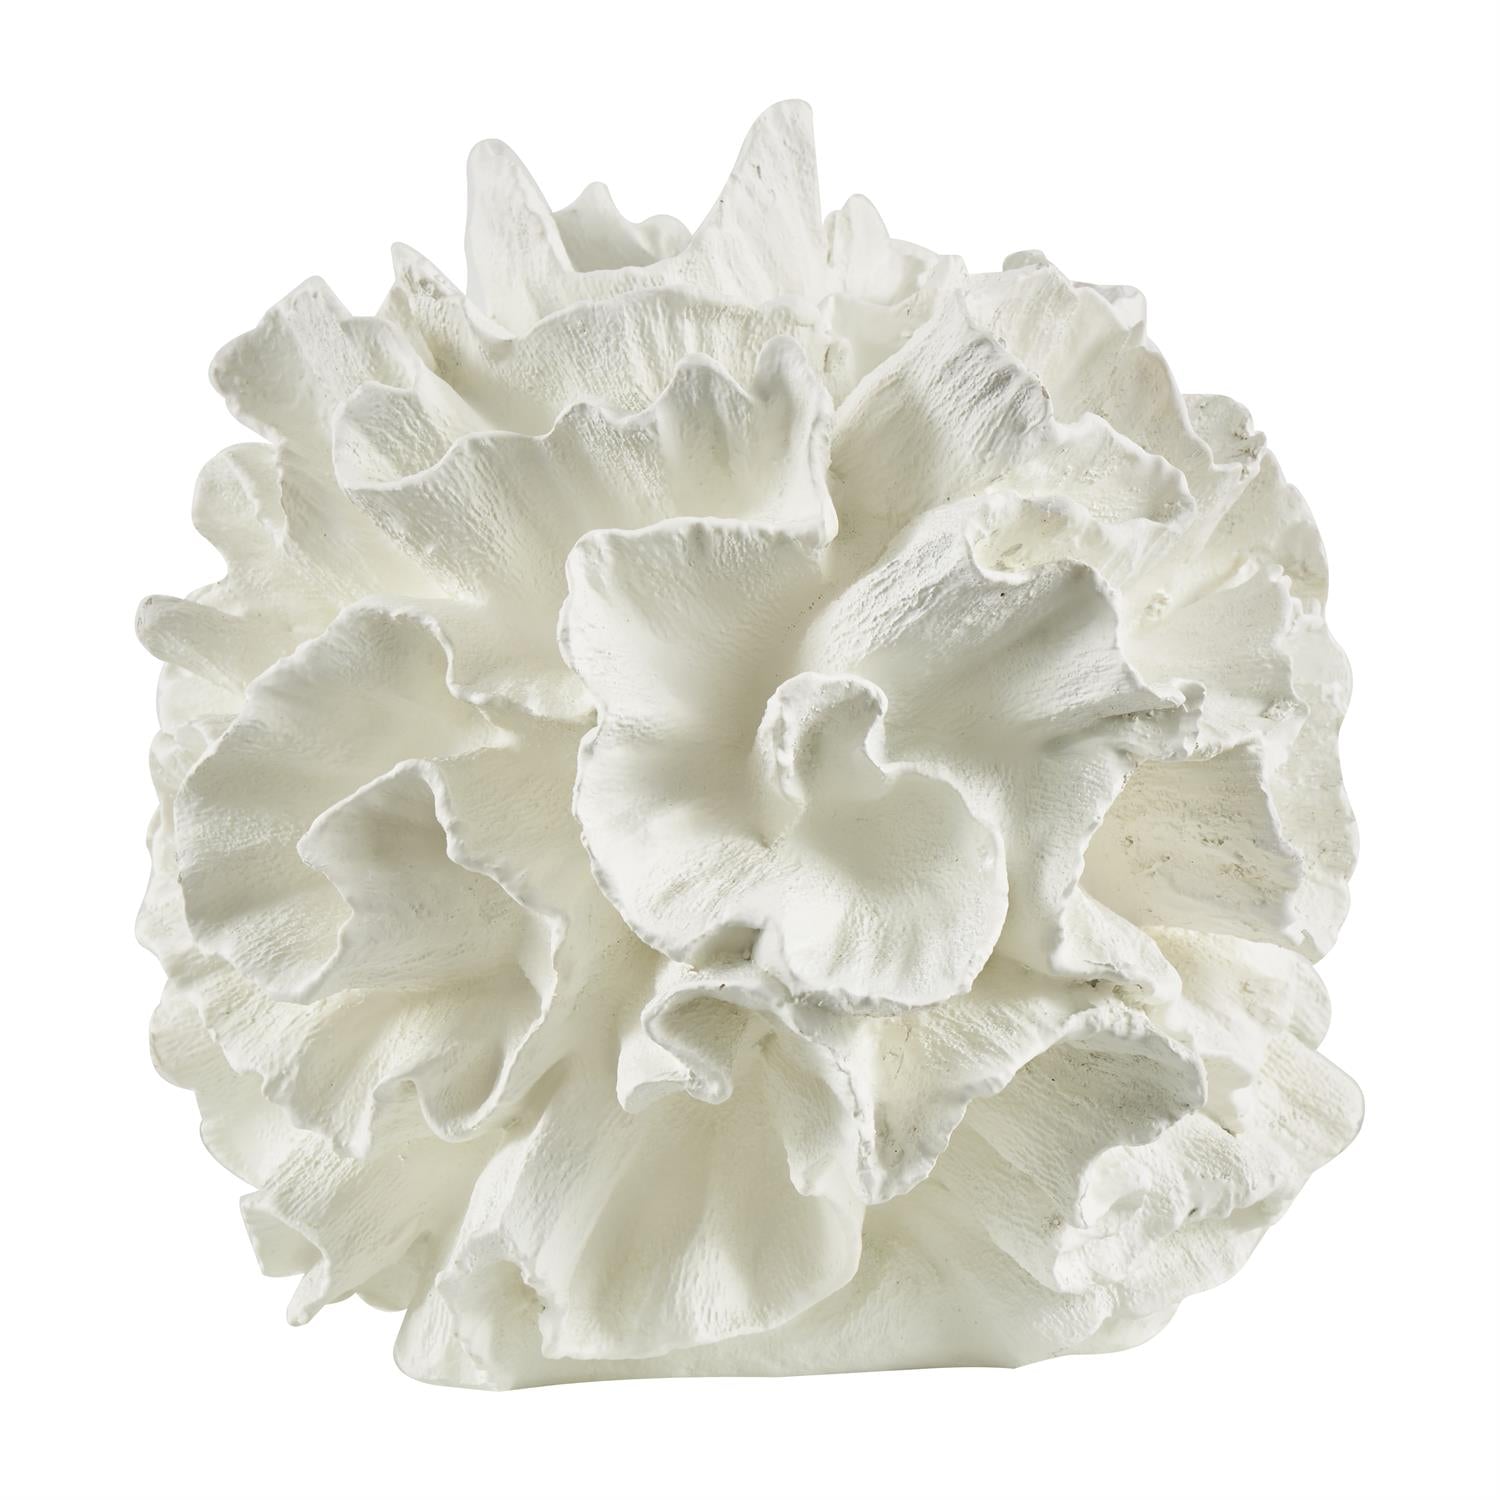 Cream Resin Coral Textured Sculpture 9" x 9" x 9"